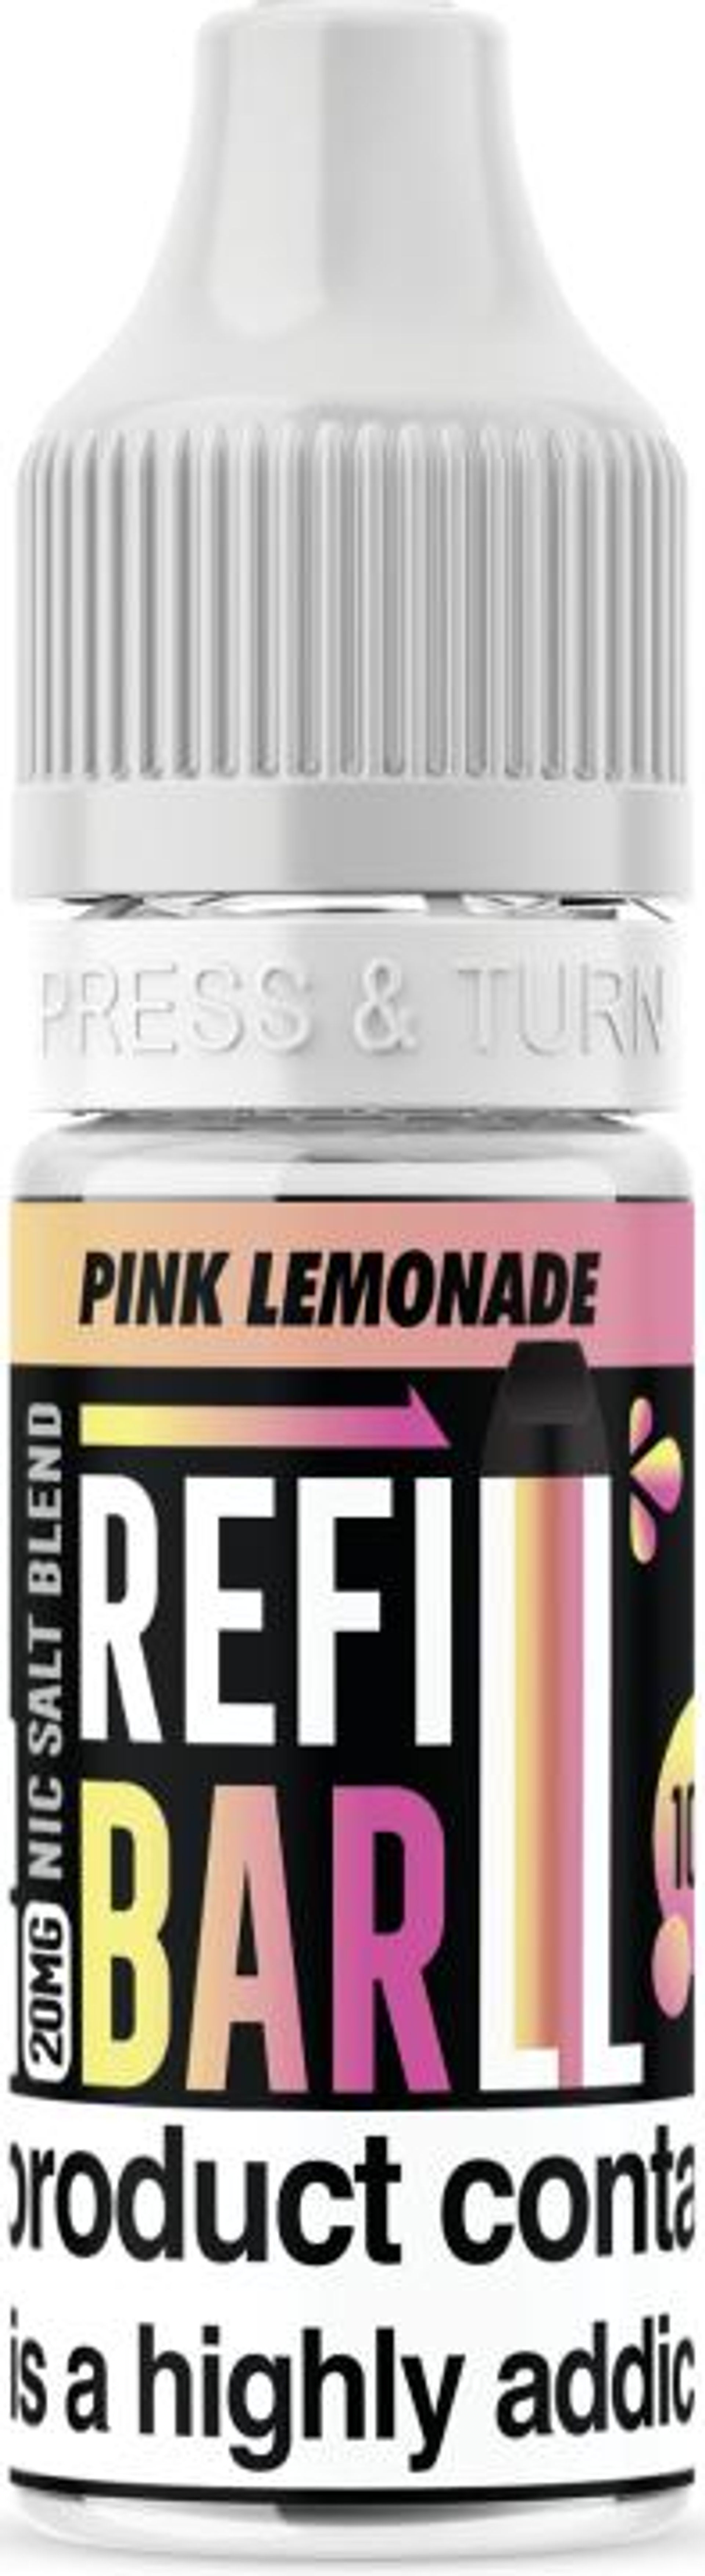 Image of Pink Lemonade by Refill Bar Salts